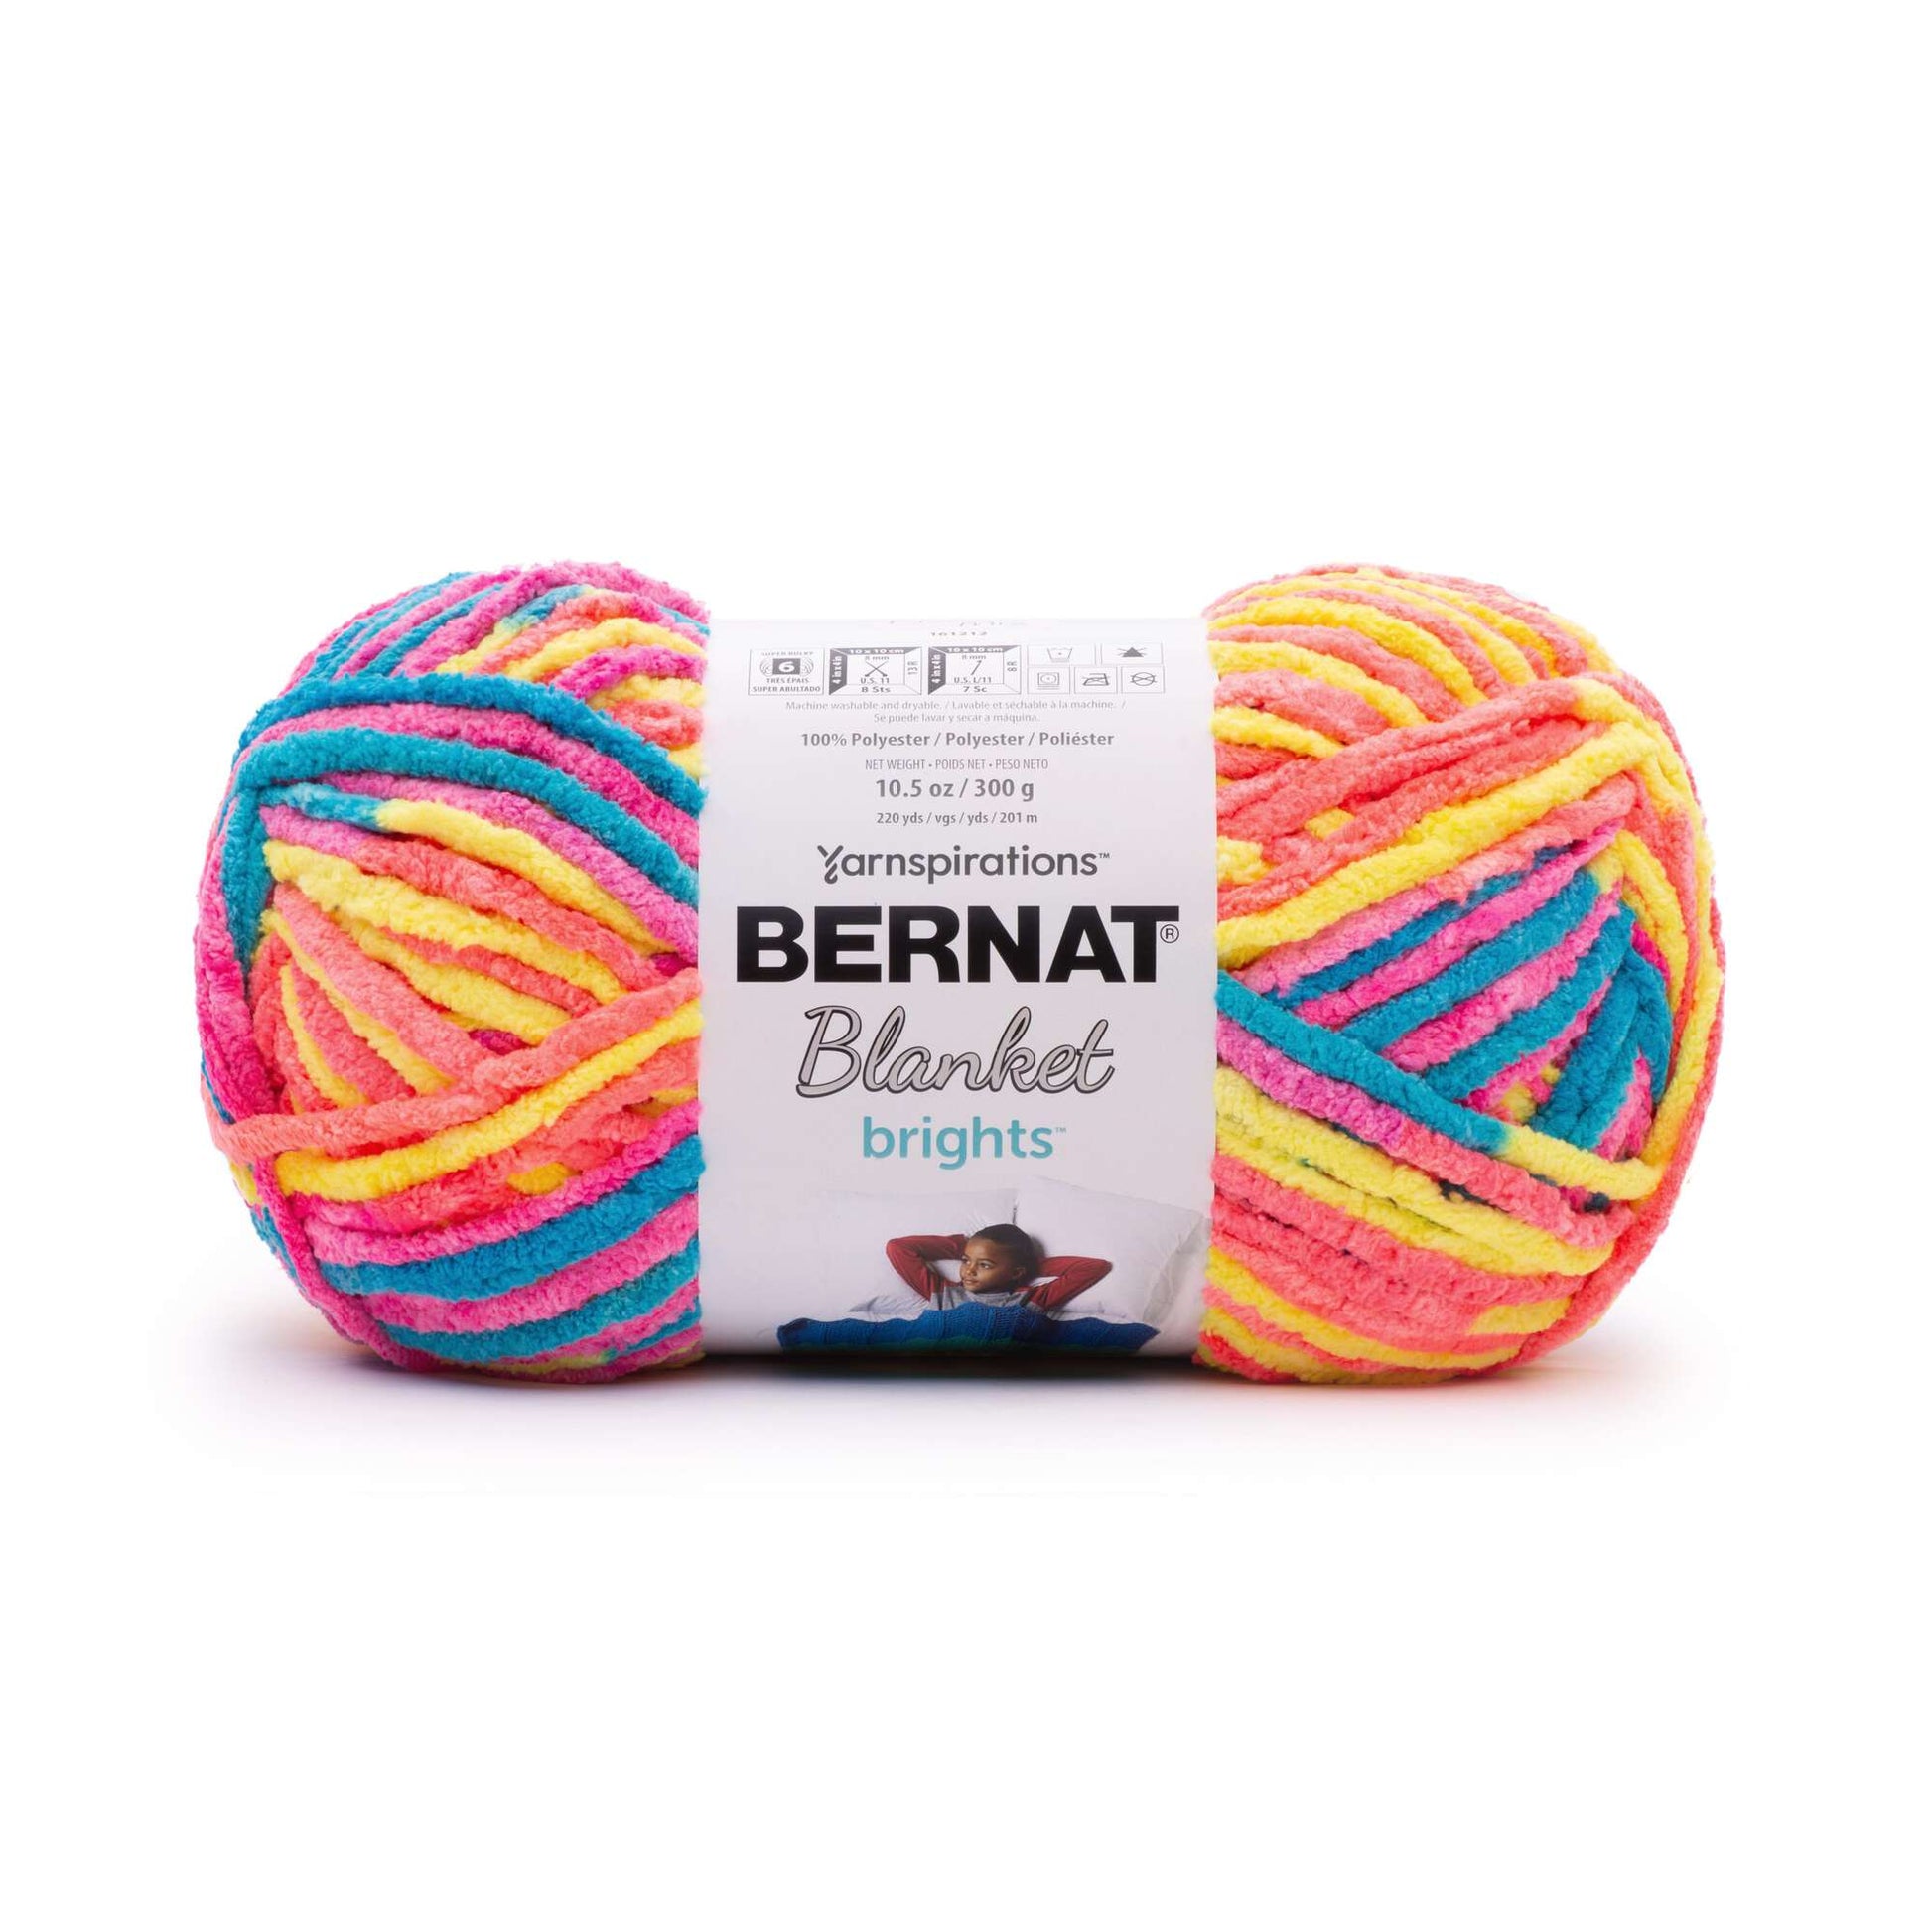 Bernat Blanket Brights Yarn-Pow Purple, 1 count - Smith's Food and